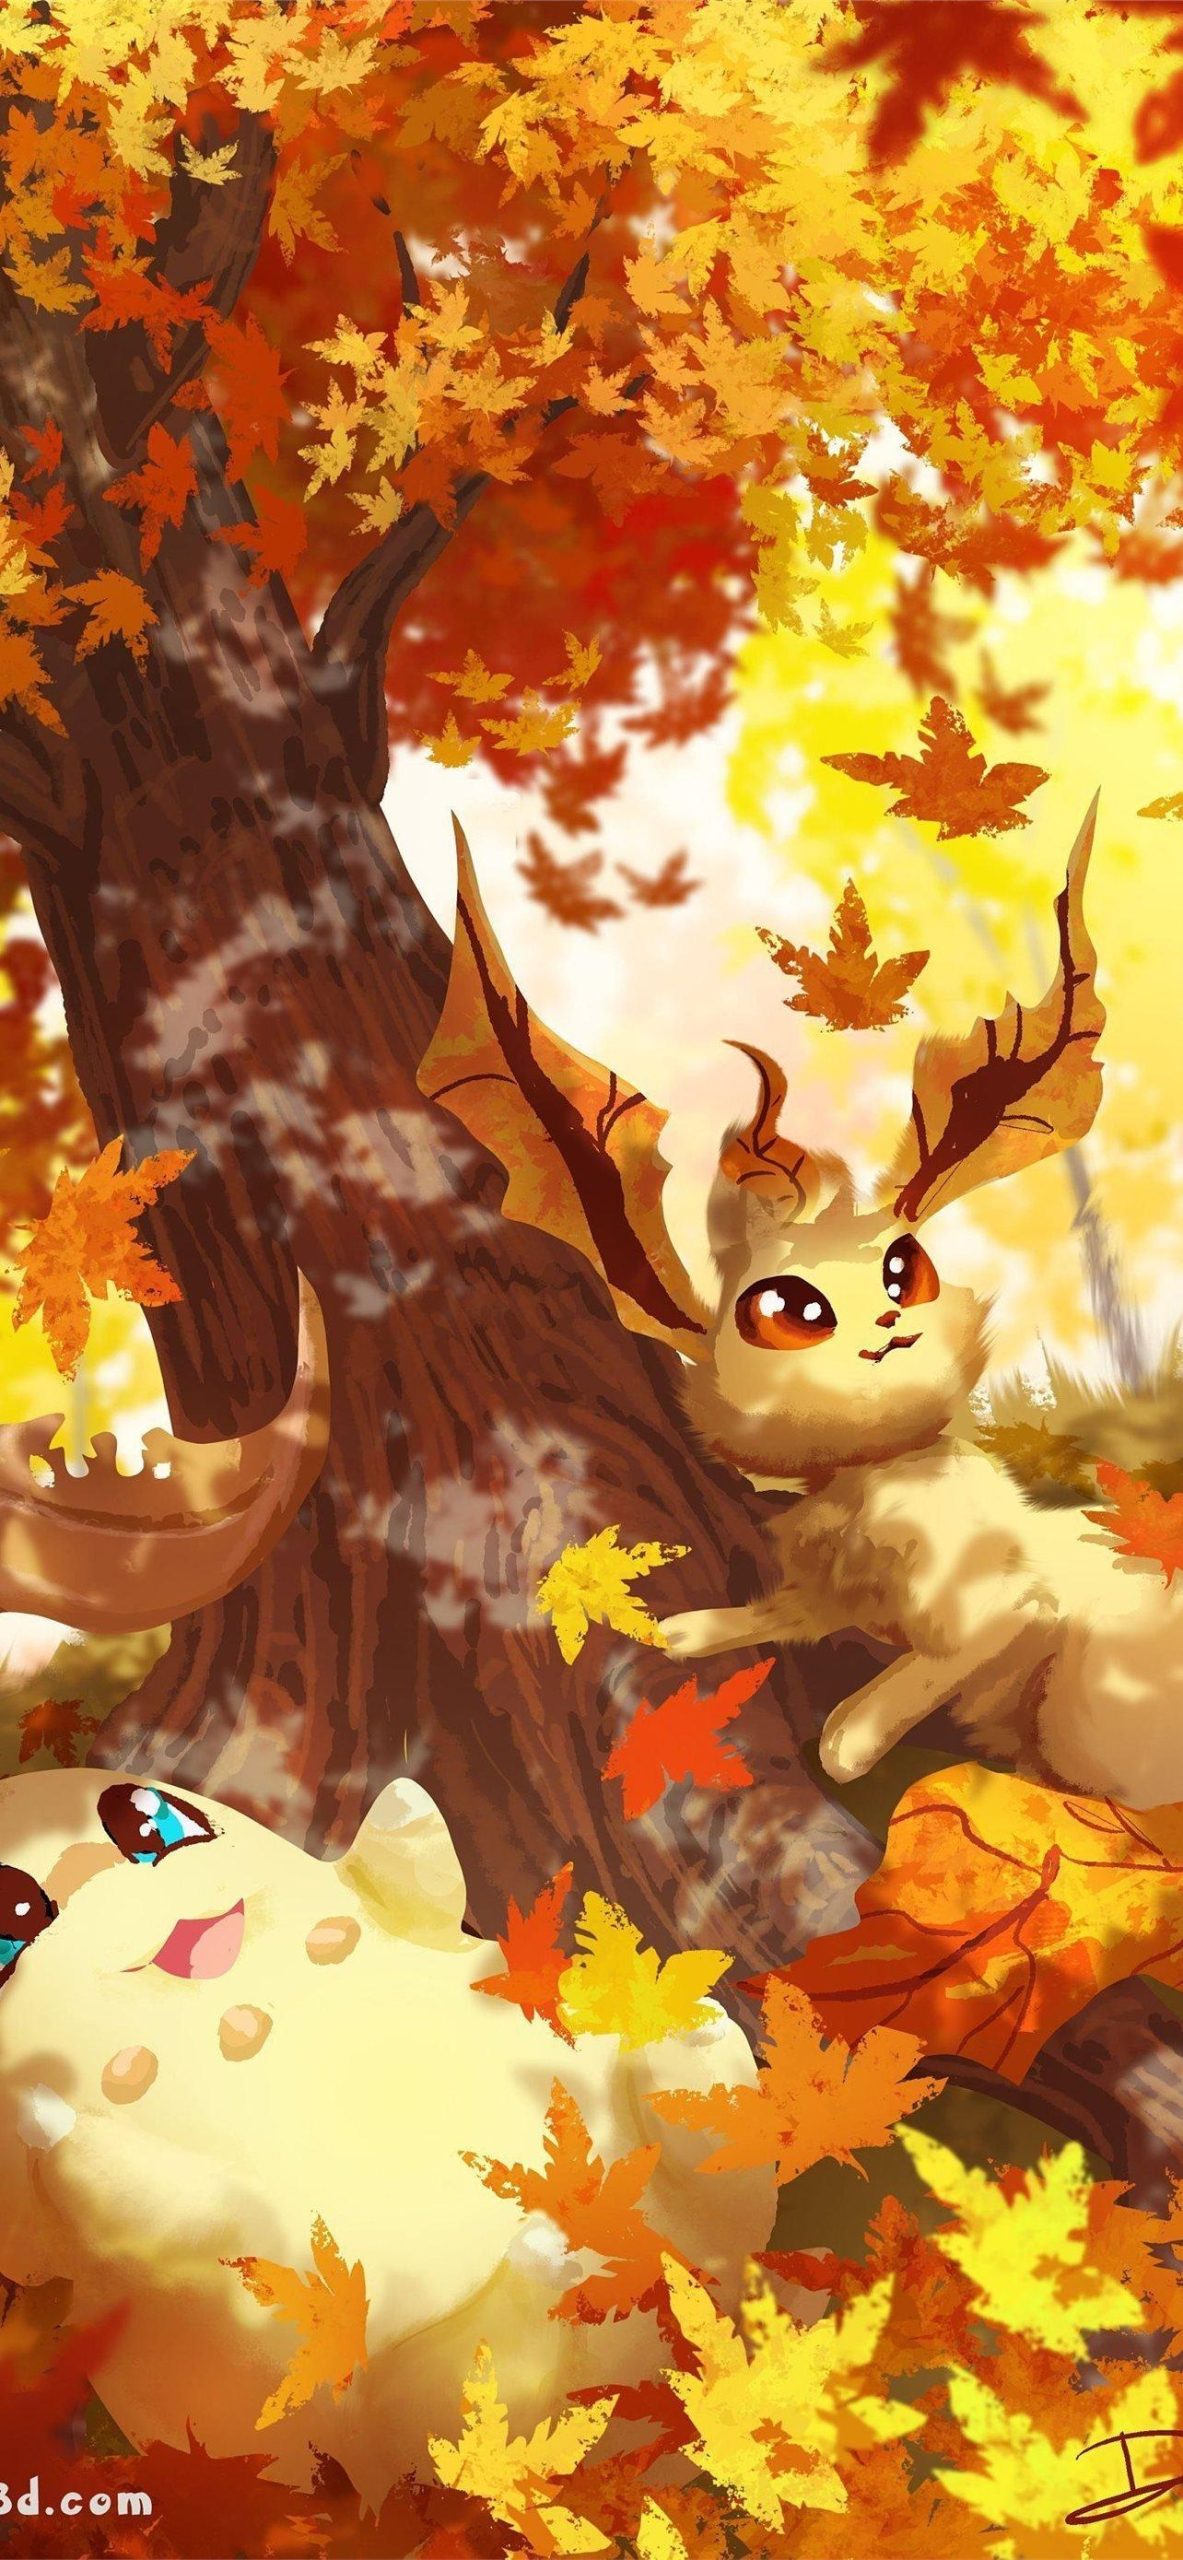 Pokemon Thanksgiving New Wallpaper, Pokemon Thanksgiving, Holidays